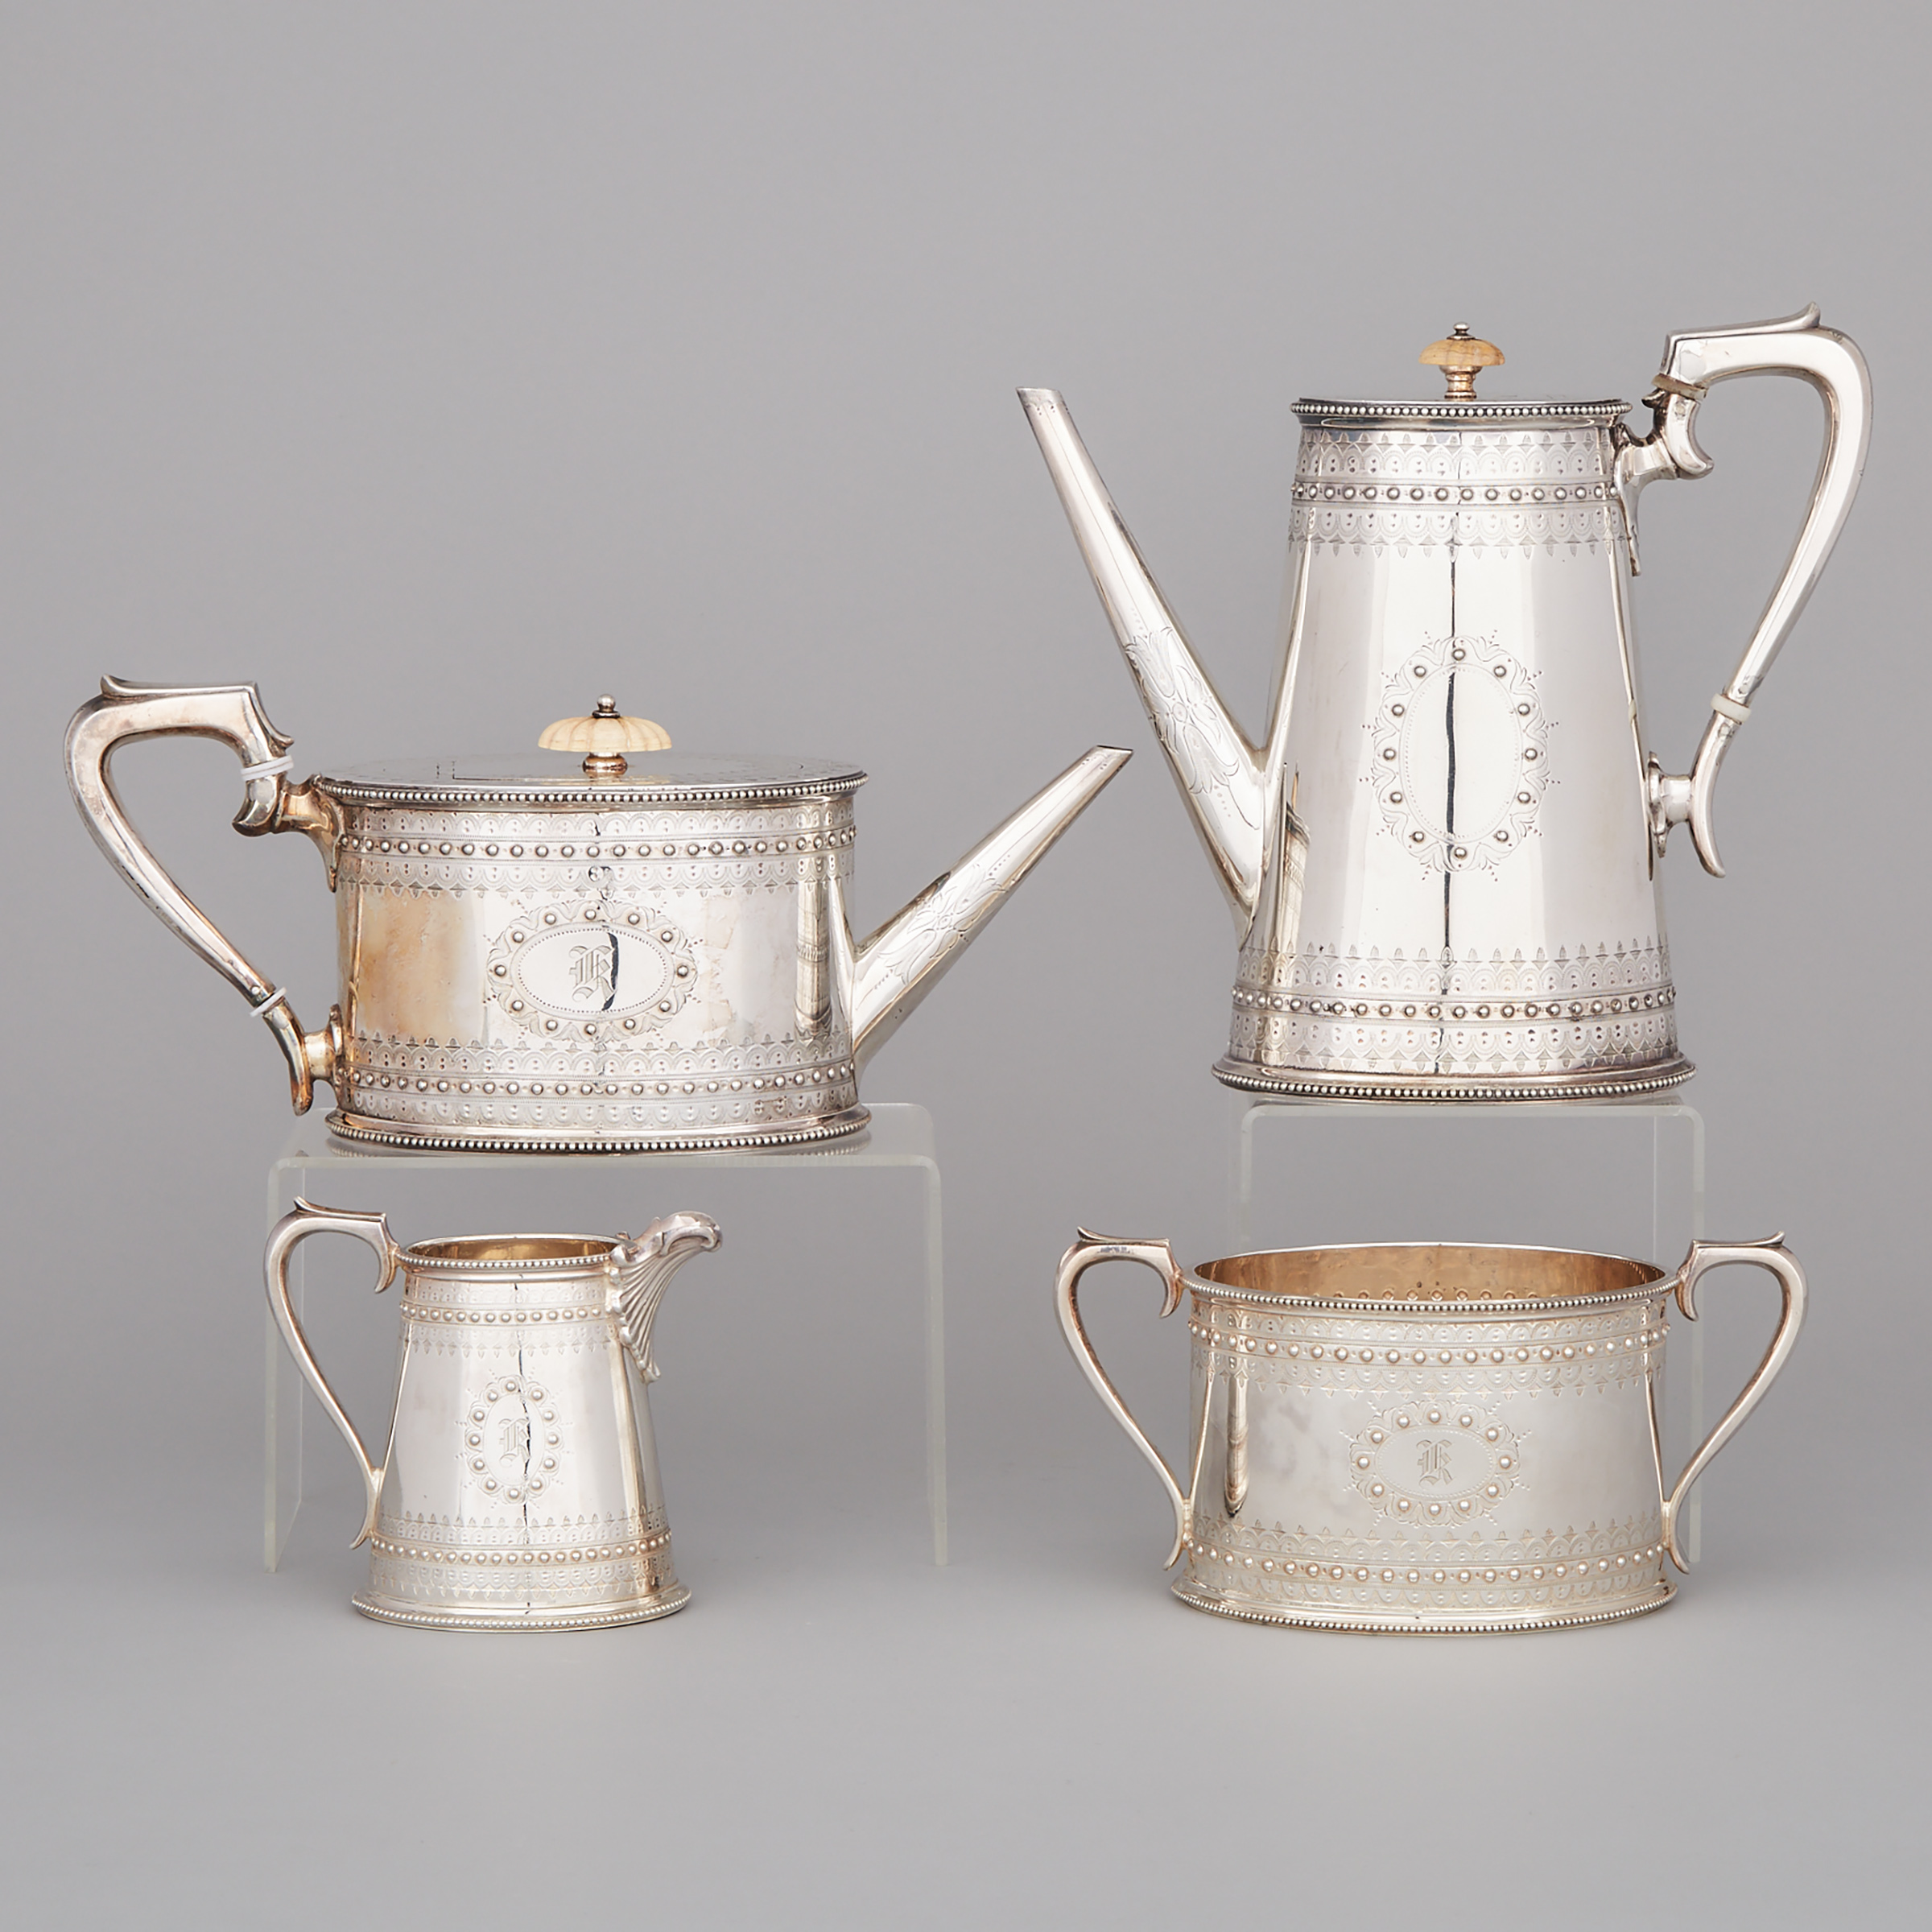 Victorian Silver Tea and Coffee Service, Joseph & Edward Bradbury, London, 1868